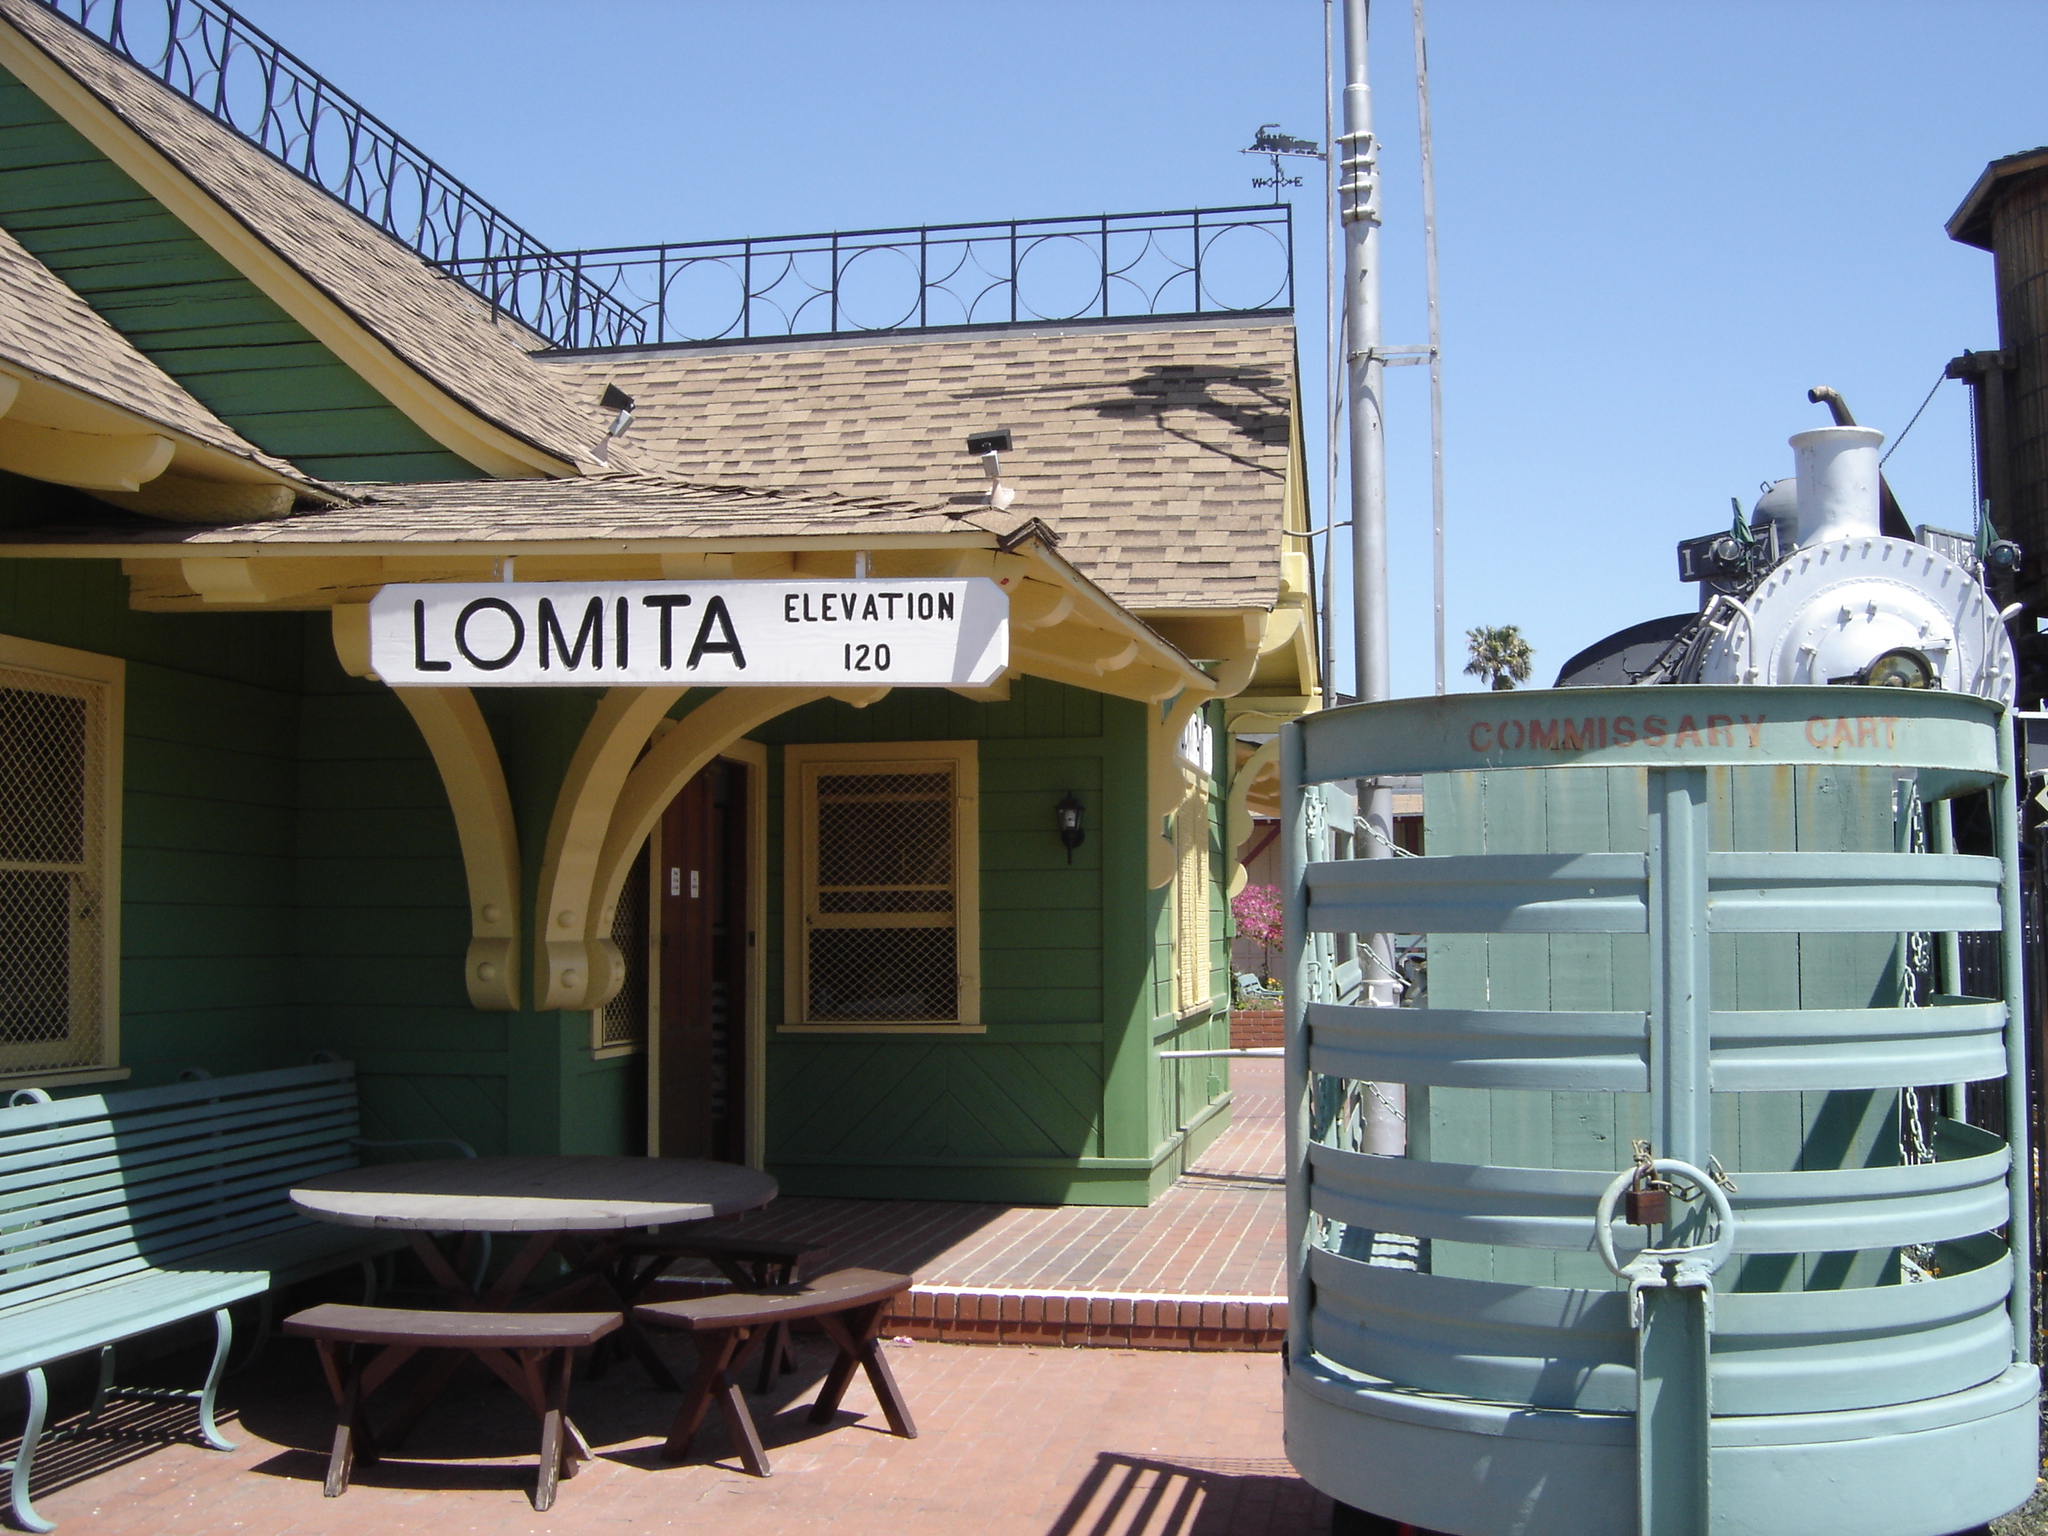 Lomita, California